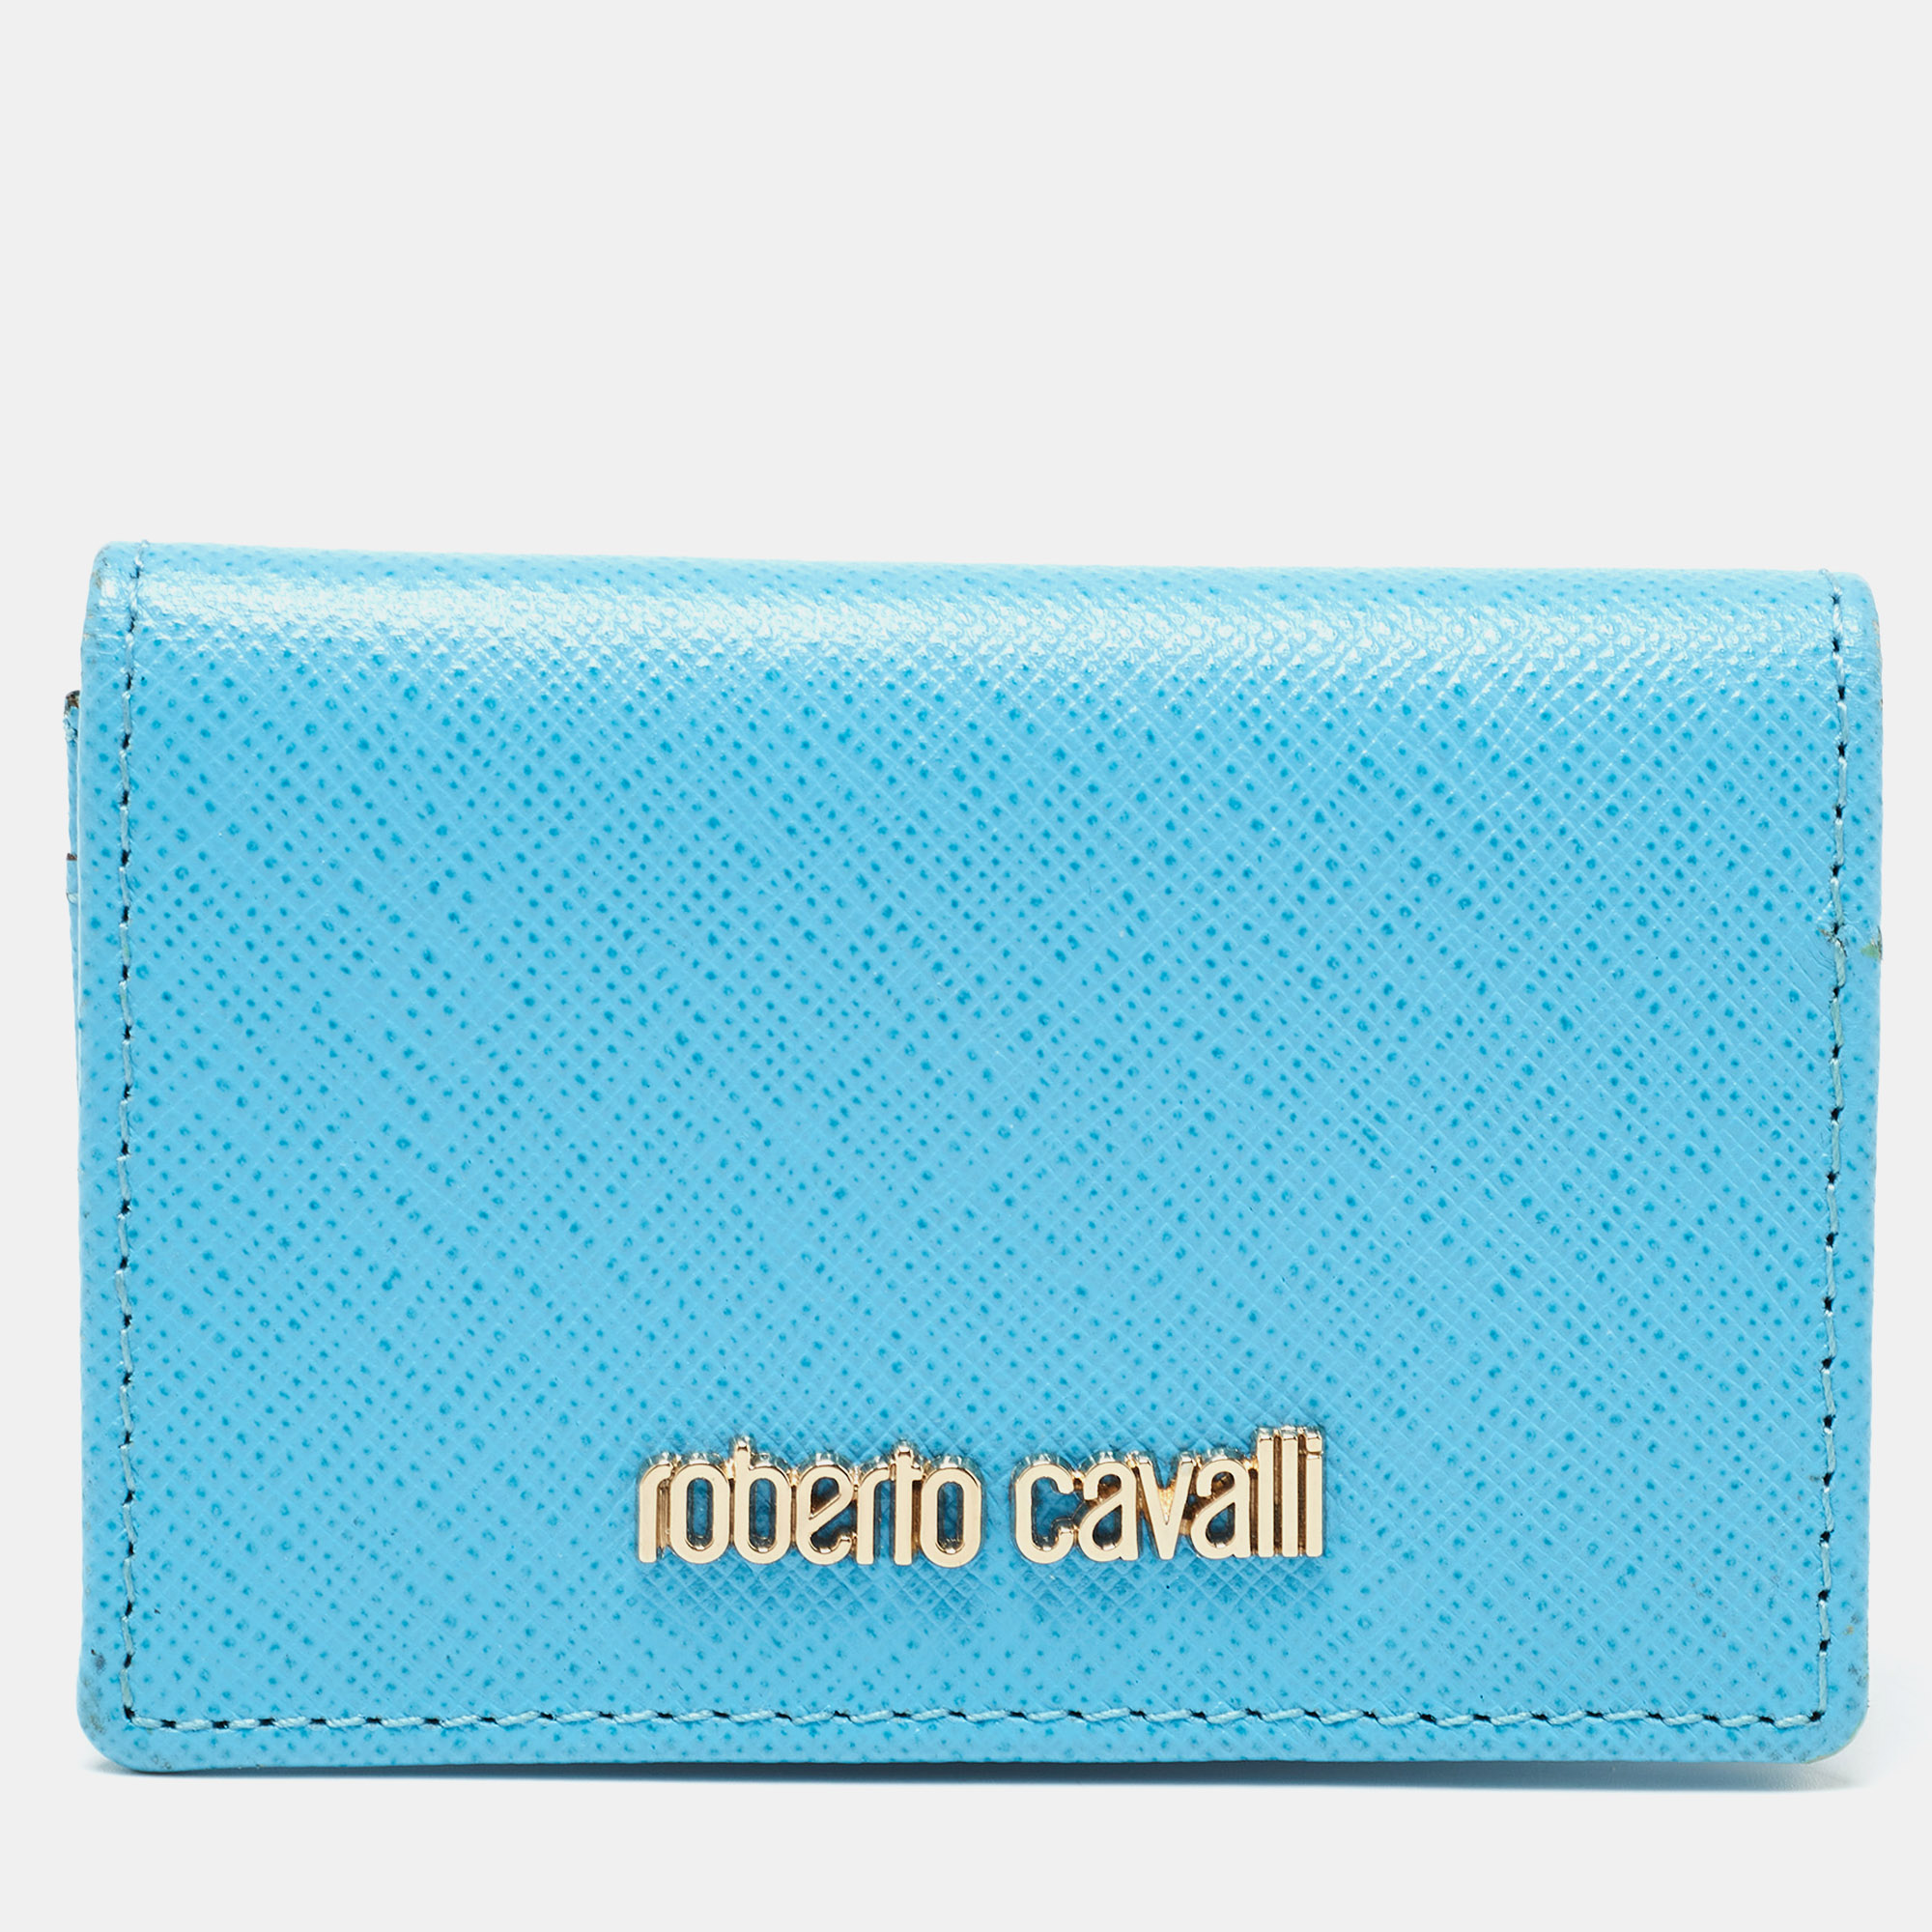 Roberto cavalli turquoise leather card case